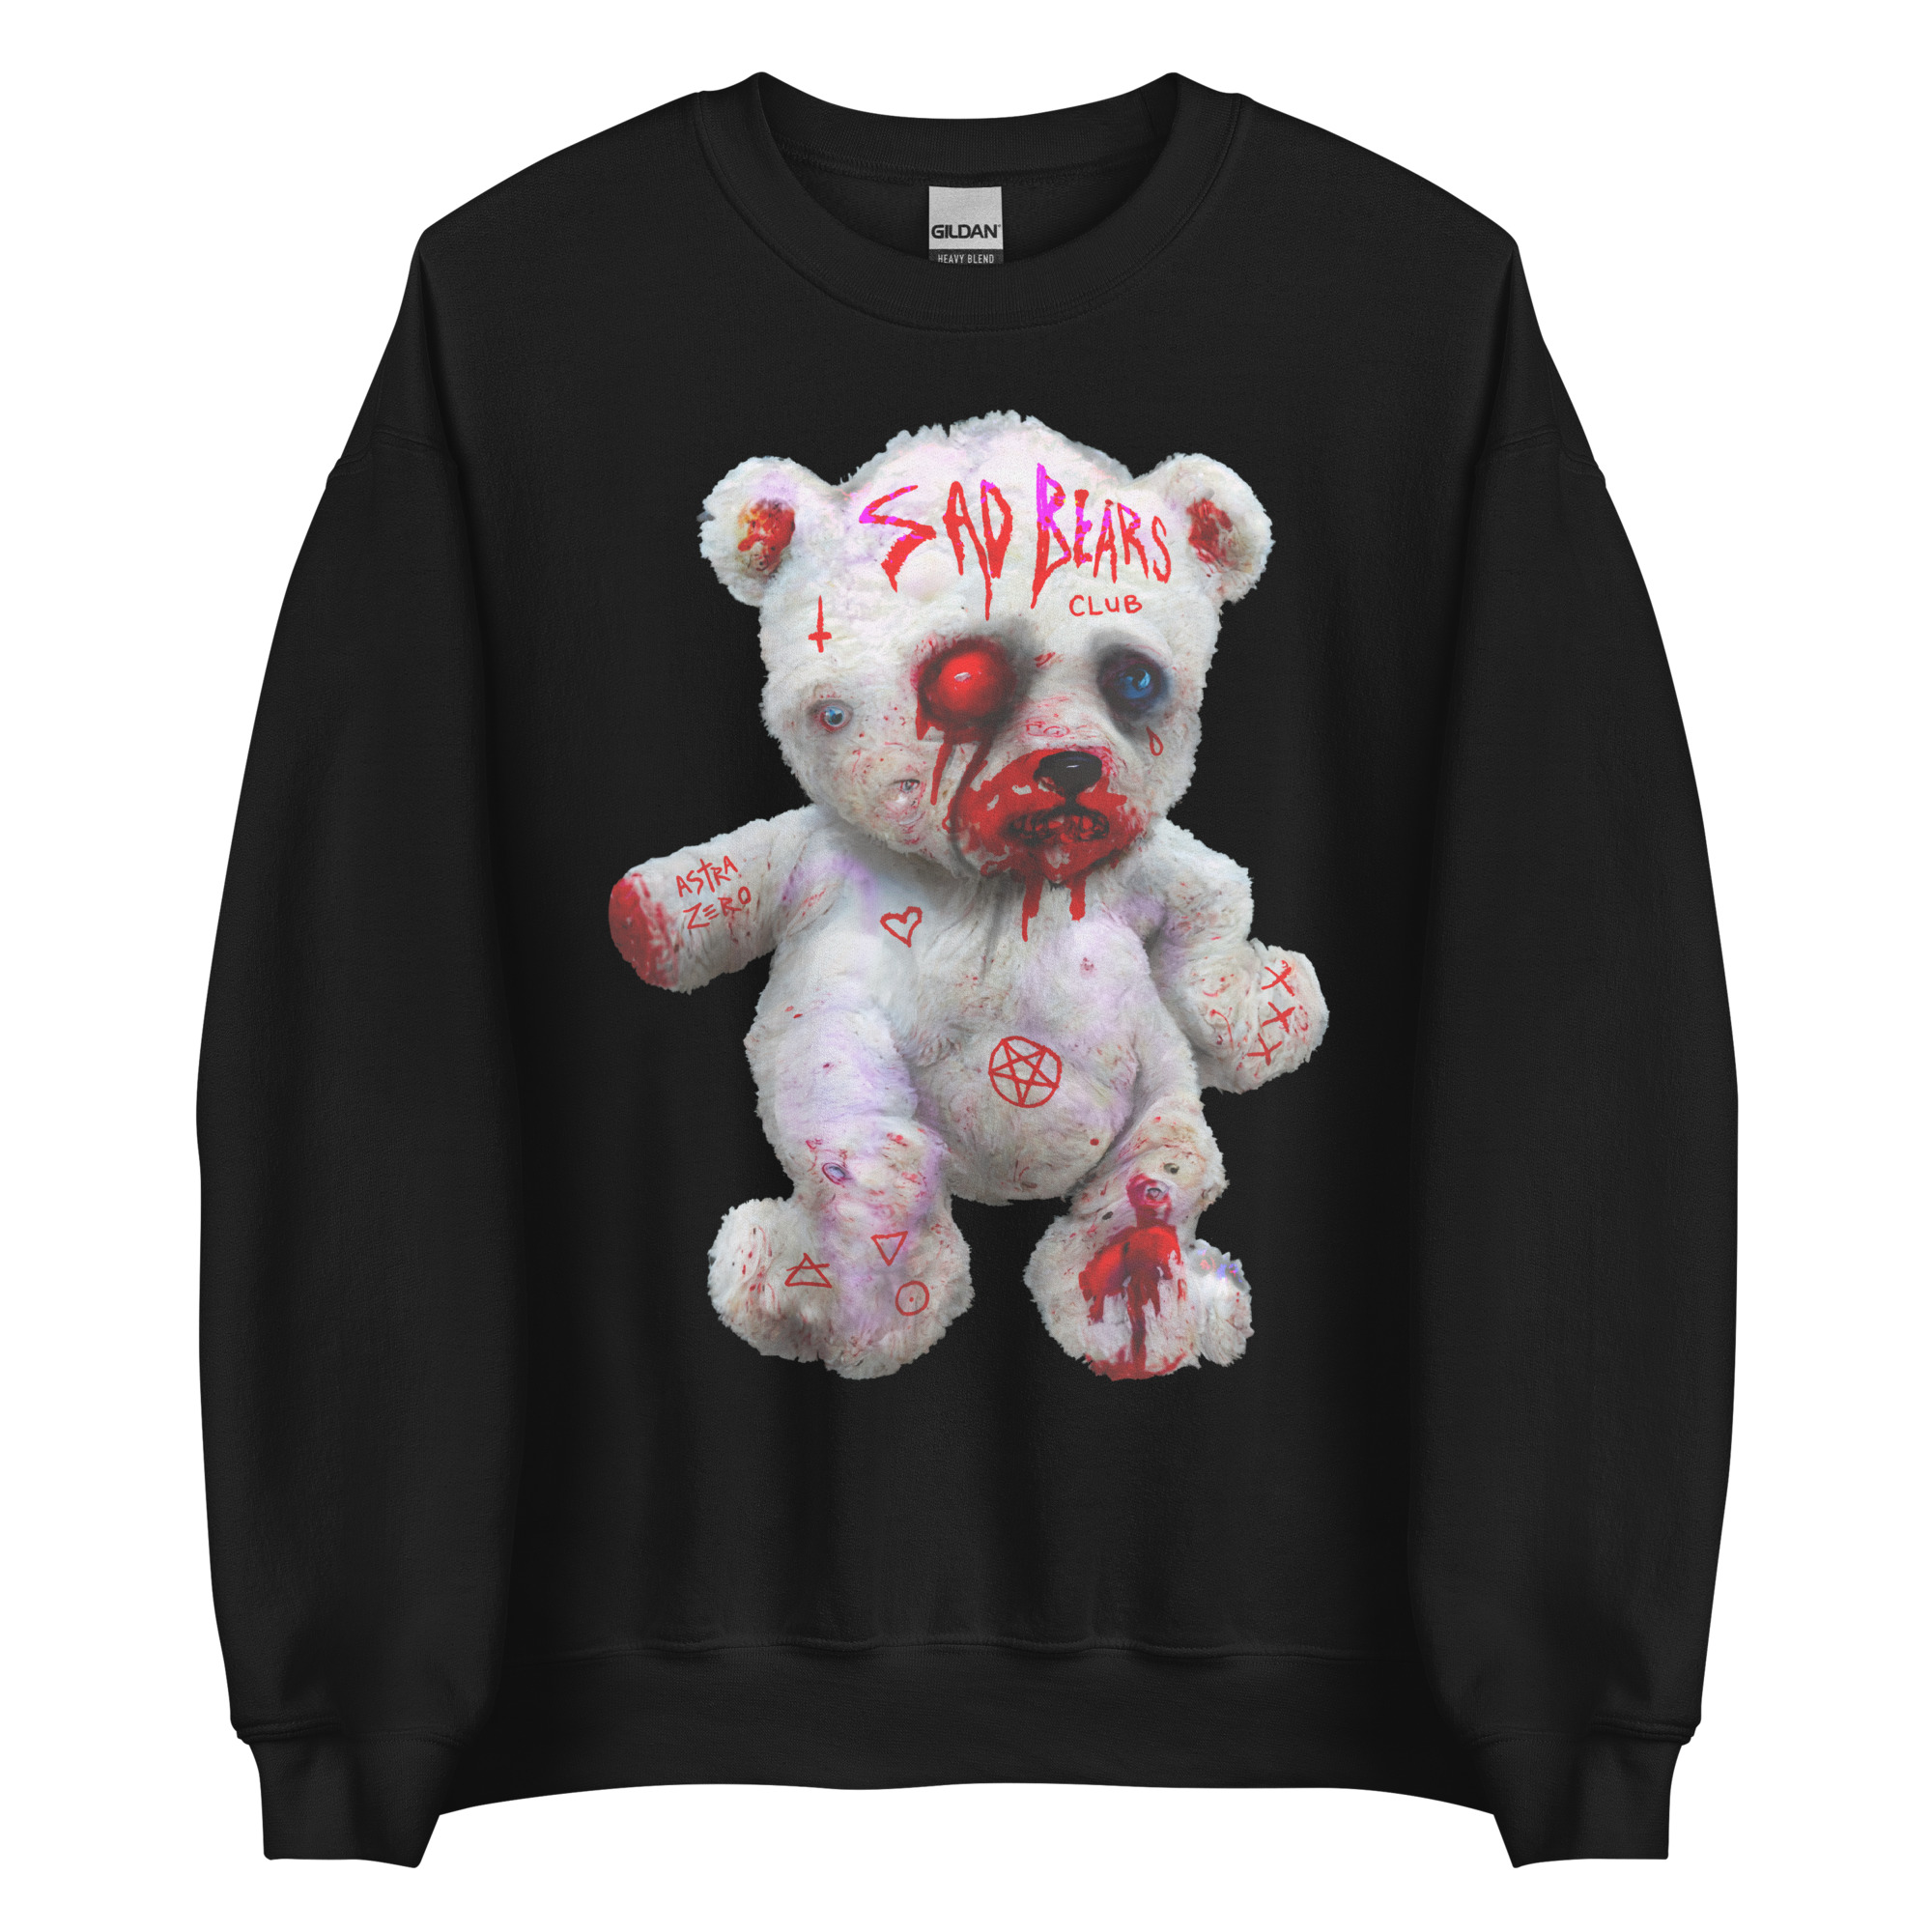 Featured image for “Sad Bears Club - Unisex Gildan Sweatshirt”